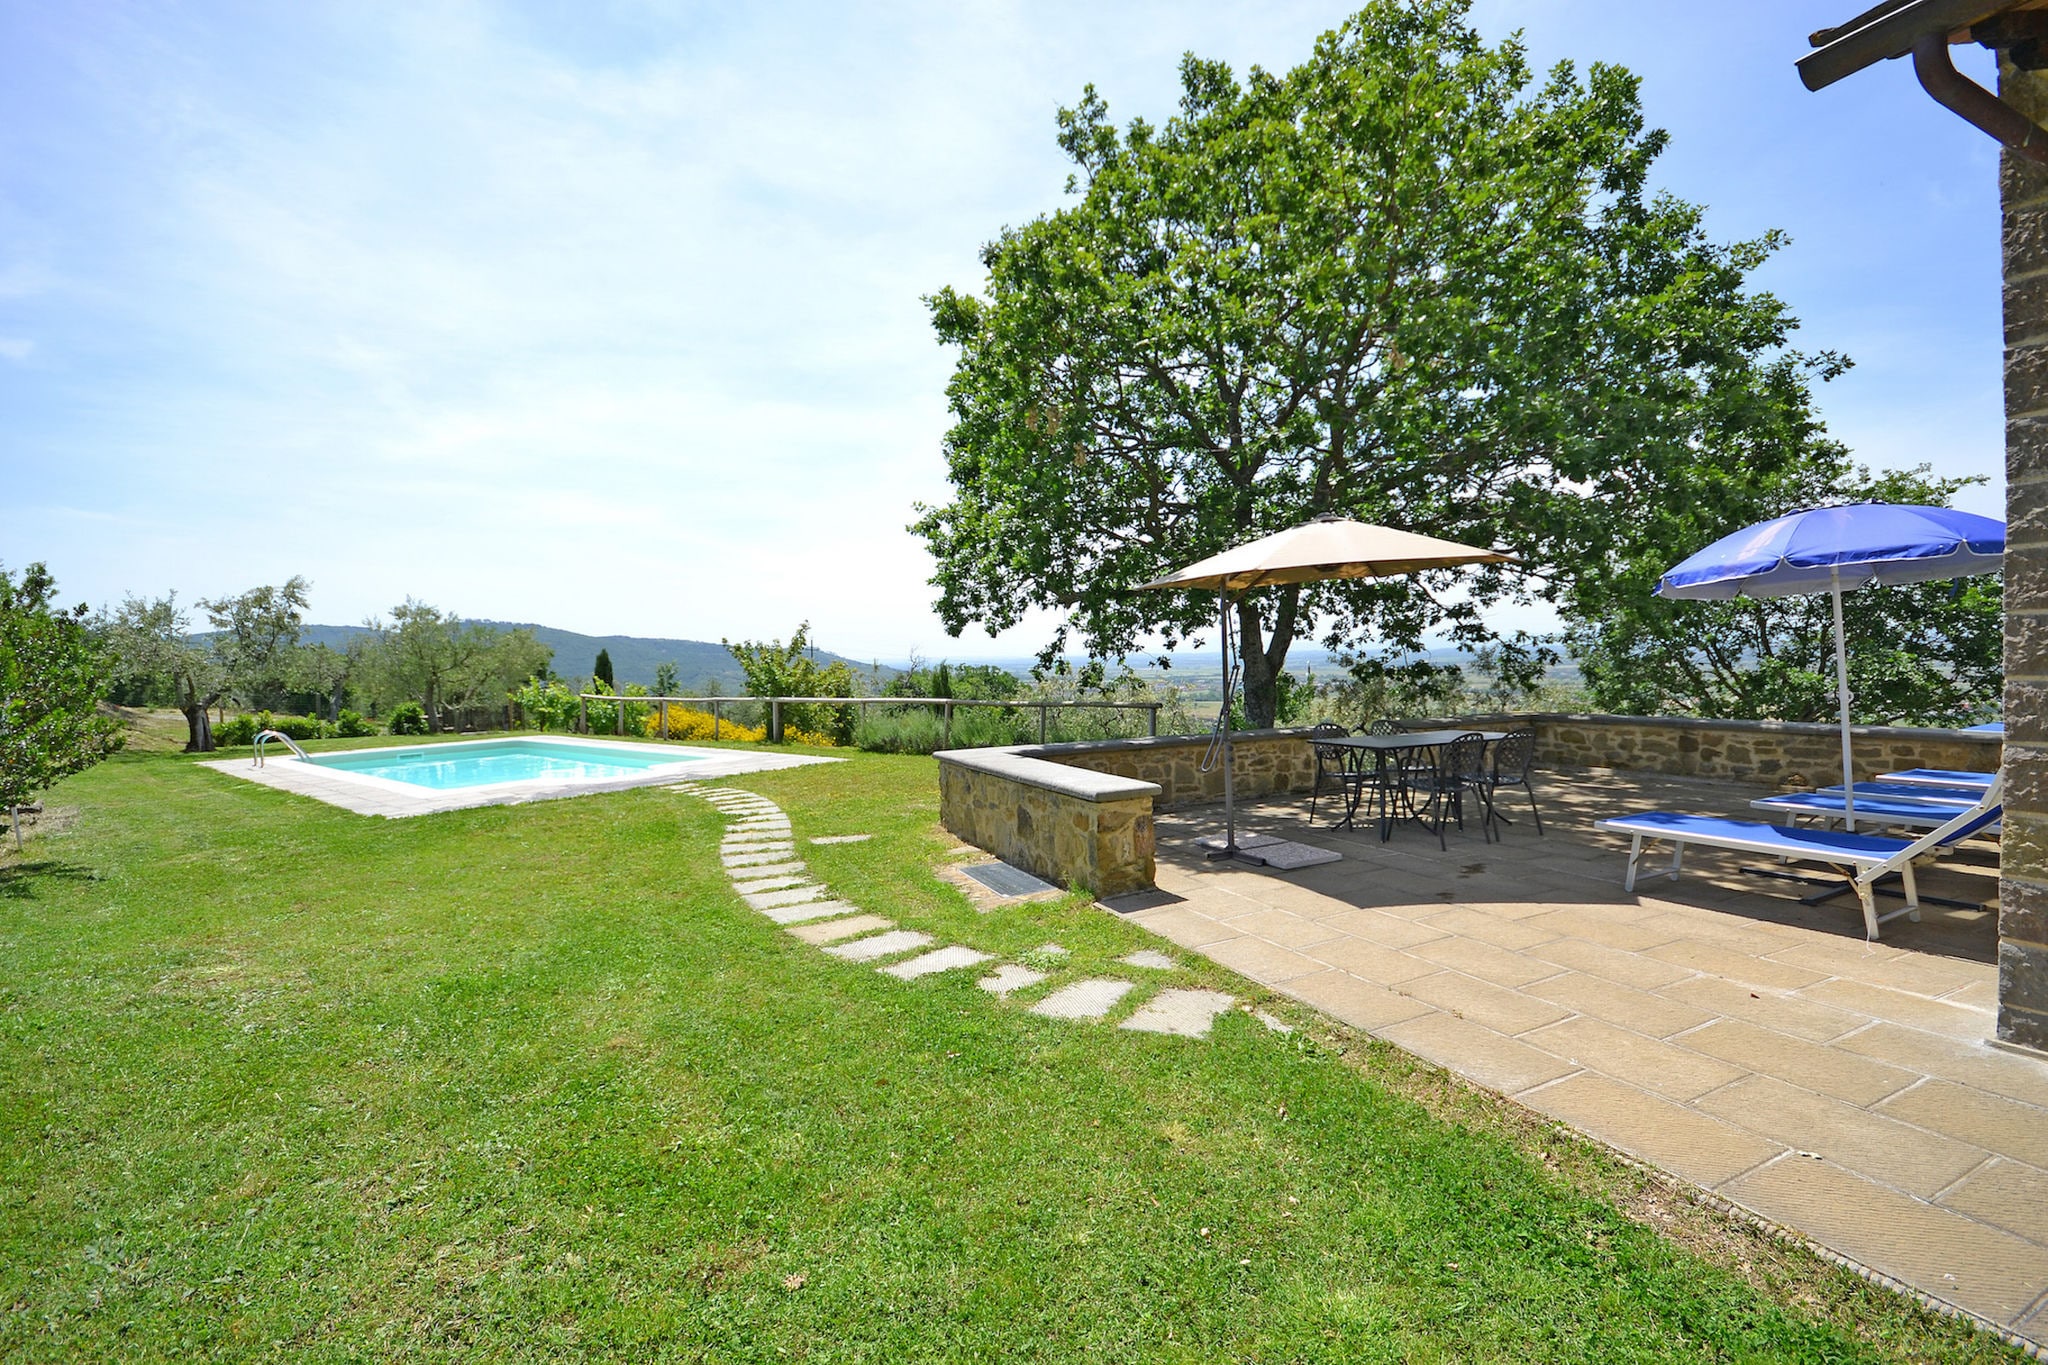 Luxurious Villa with Pool in Cortona Italy